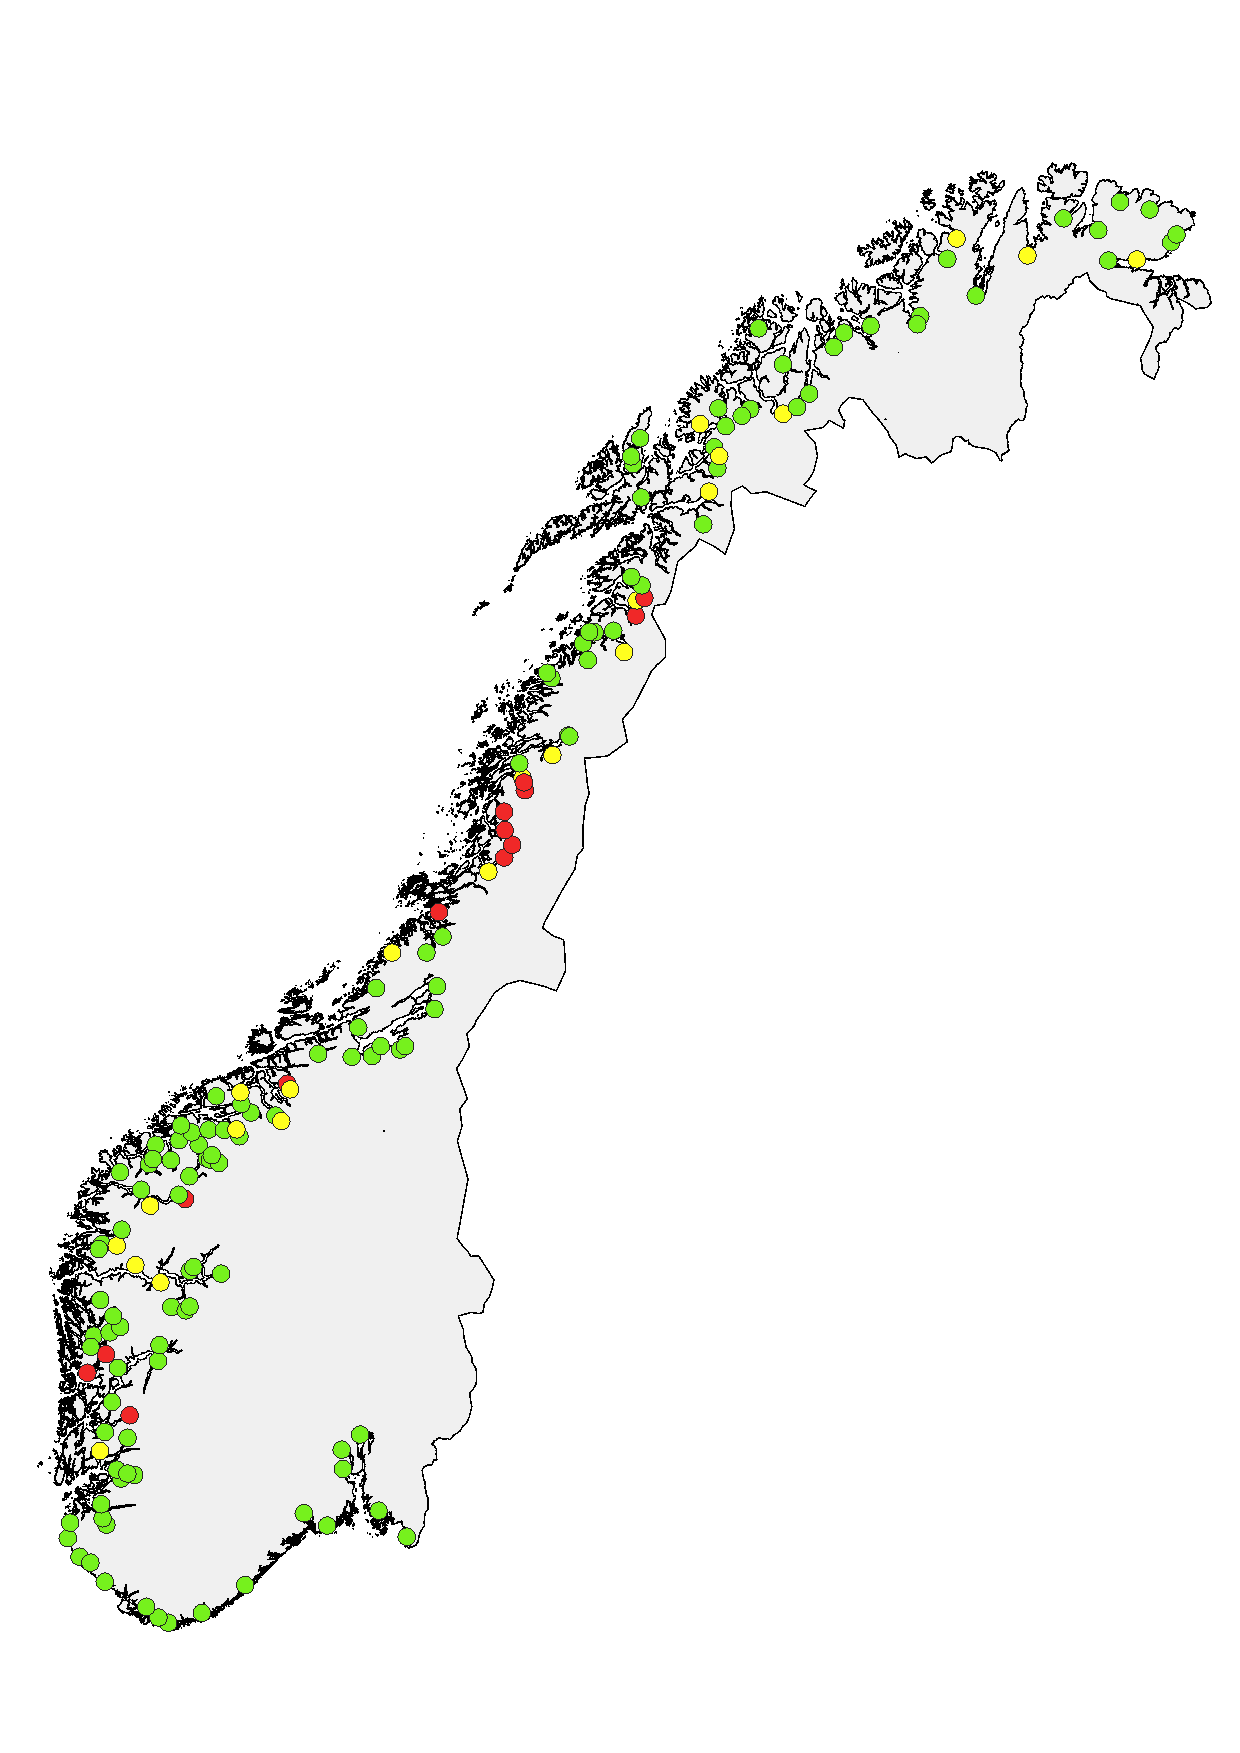 Norgeskart med punkter for undersøkte elver. Grønne punkter er lavt innslag, gule middels og røde punkter er elver med høyt innslag av rømt oppdrettslaks